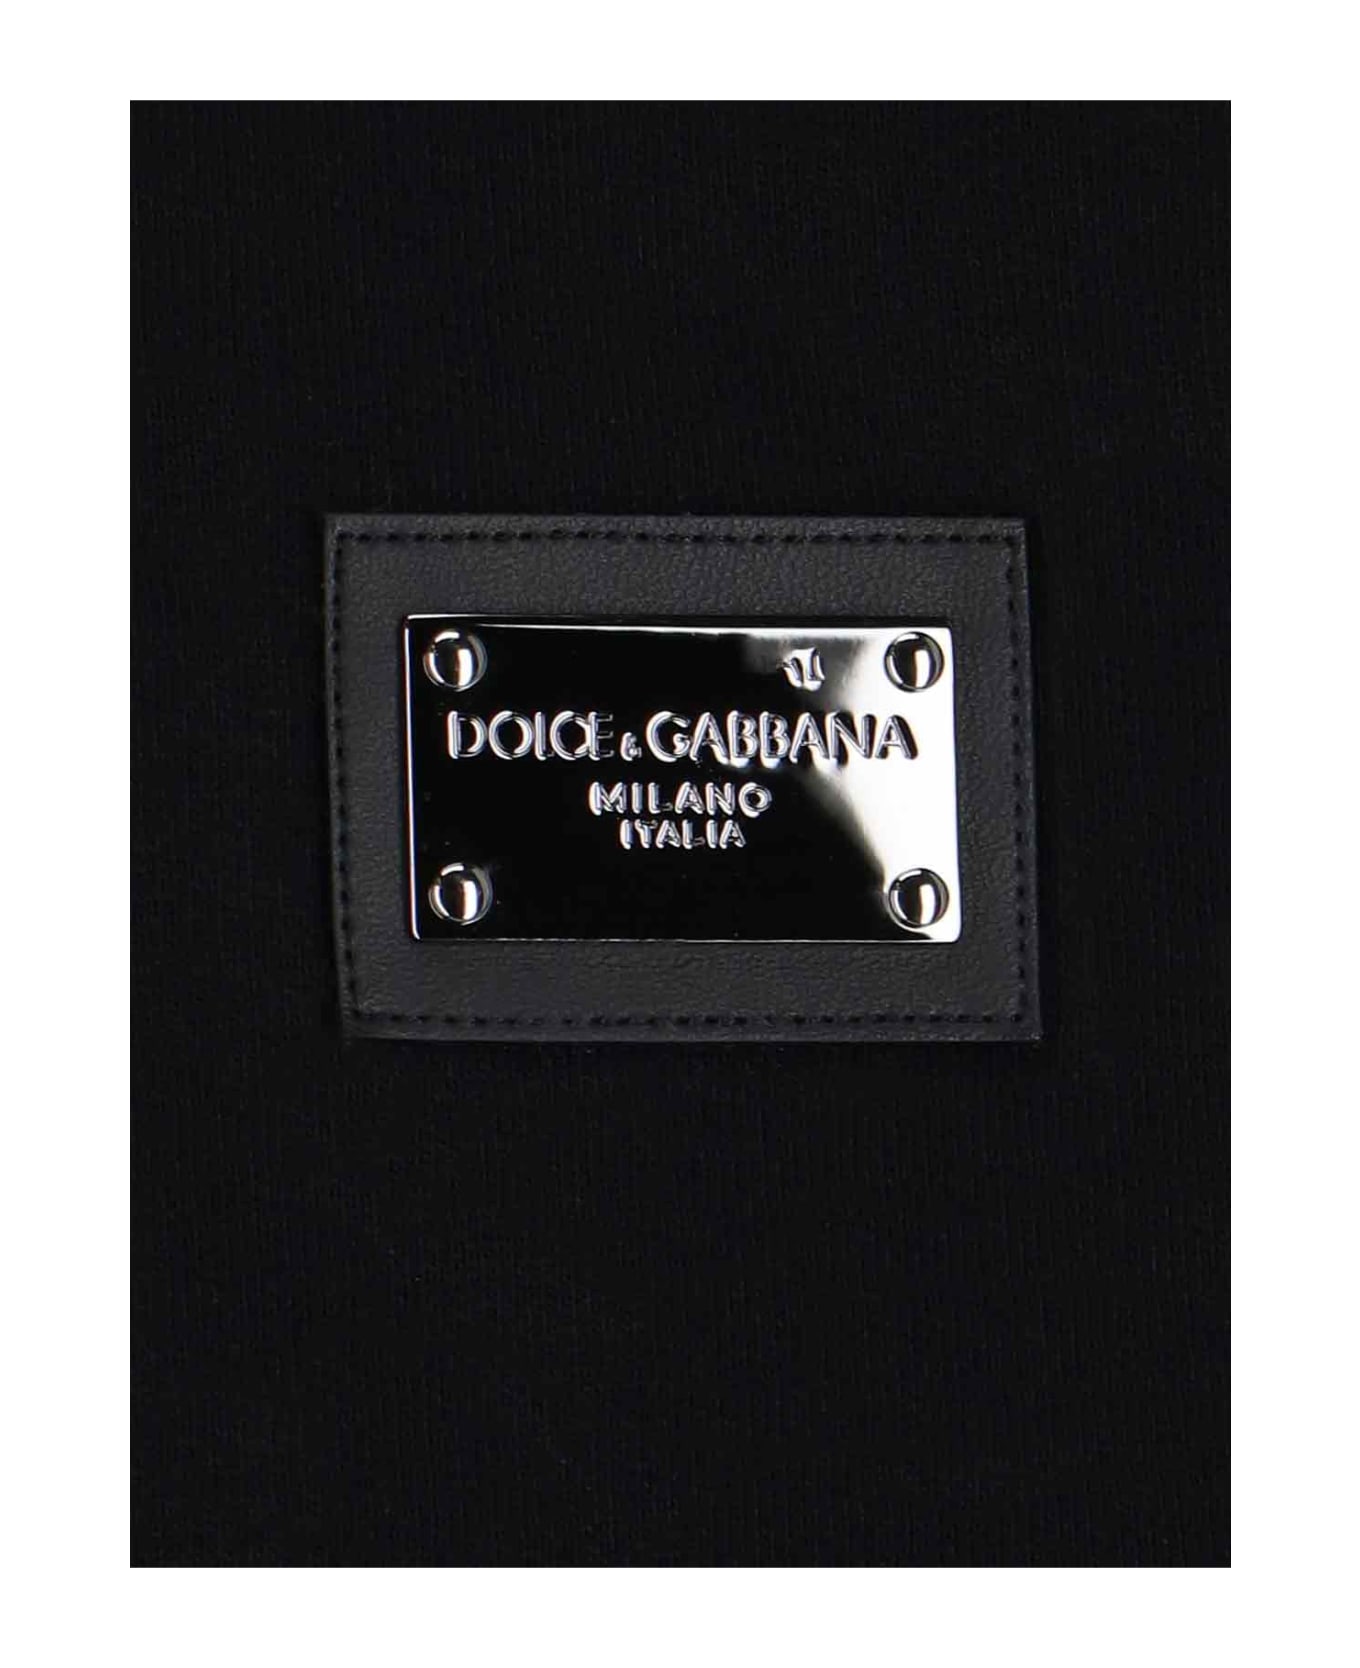 Dolce & Gabbana Logo Crewneck - Black  